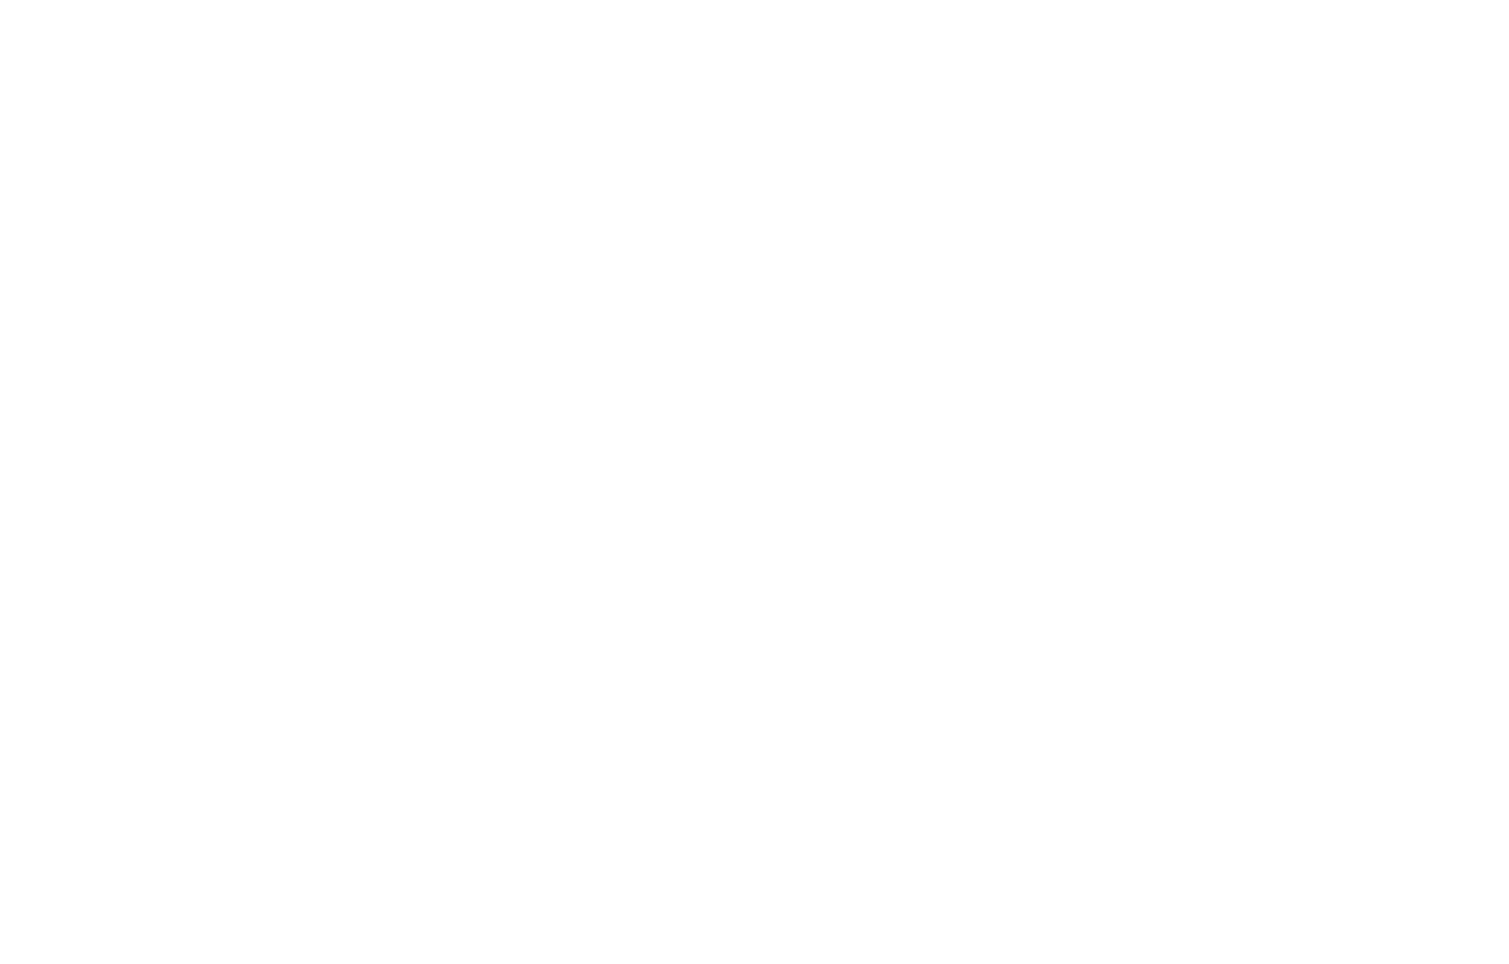 KHA Architects